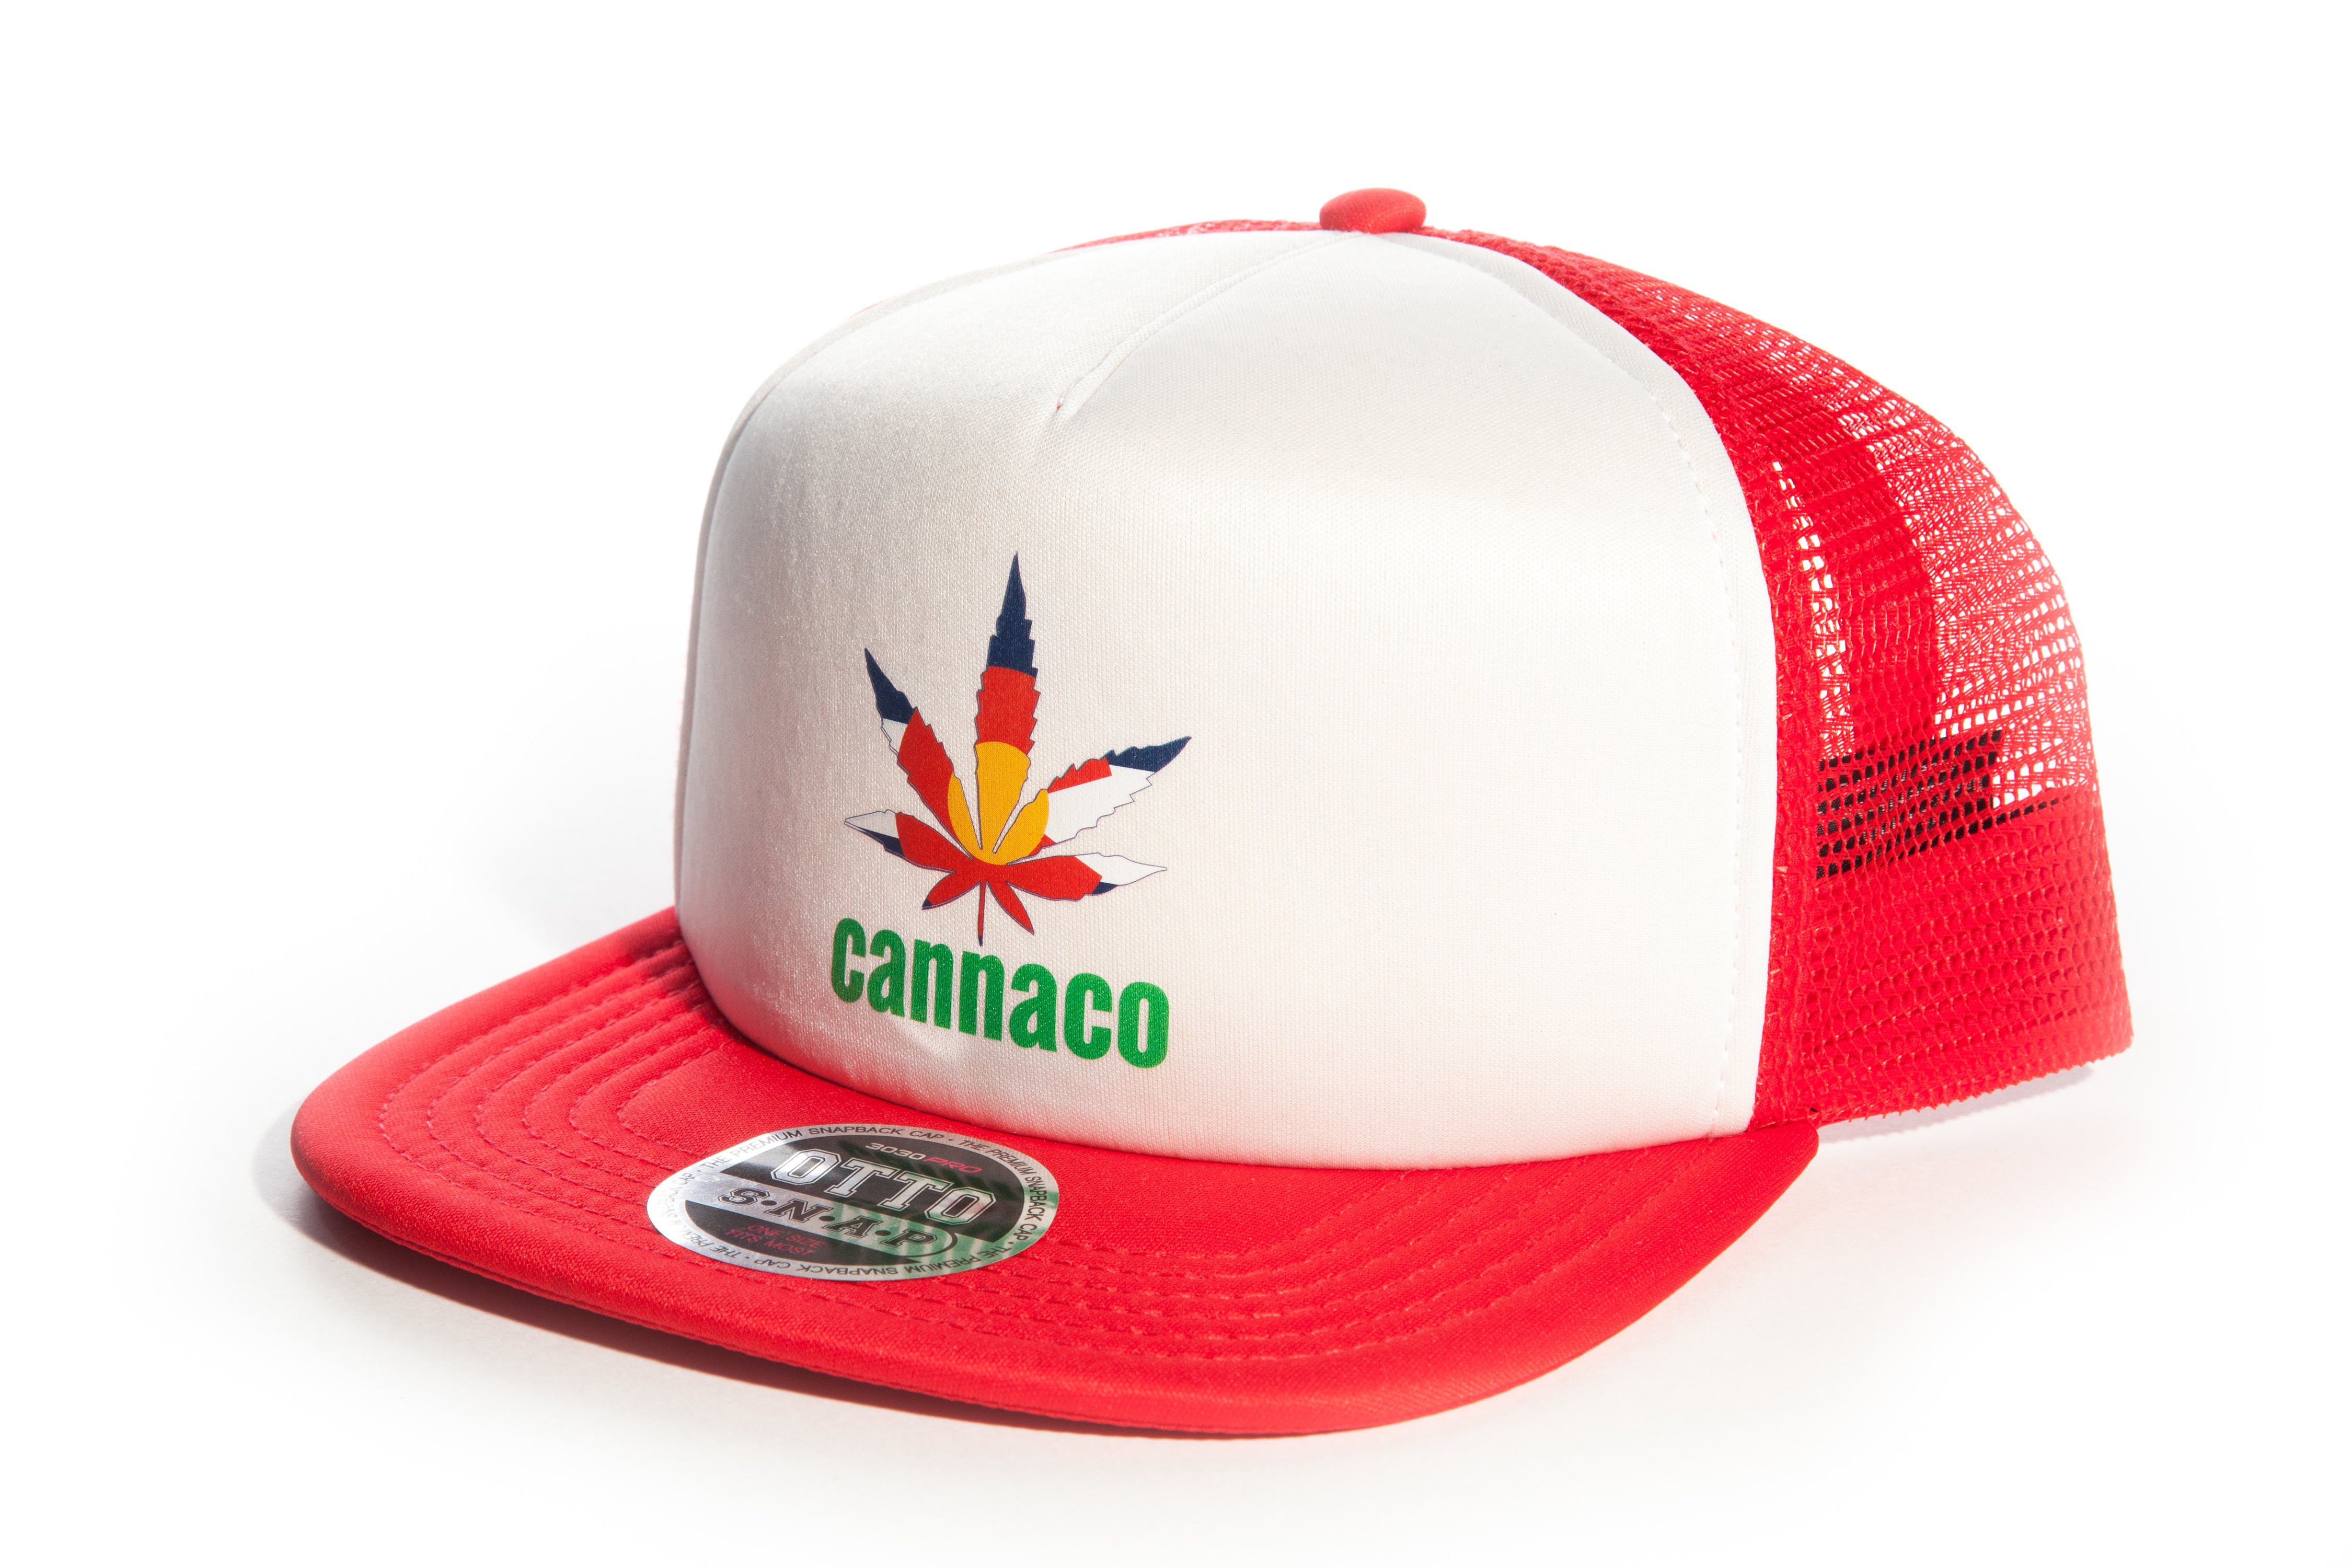 gear-red-trucker-cap-with-cannaco-logo